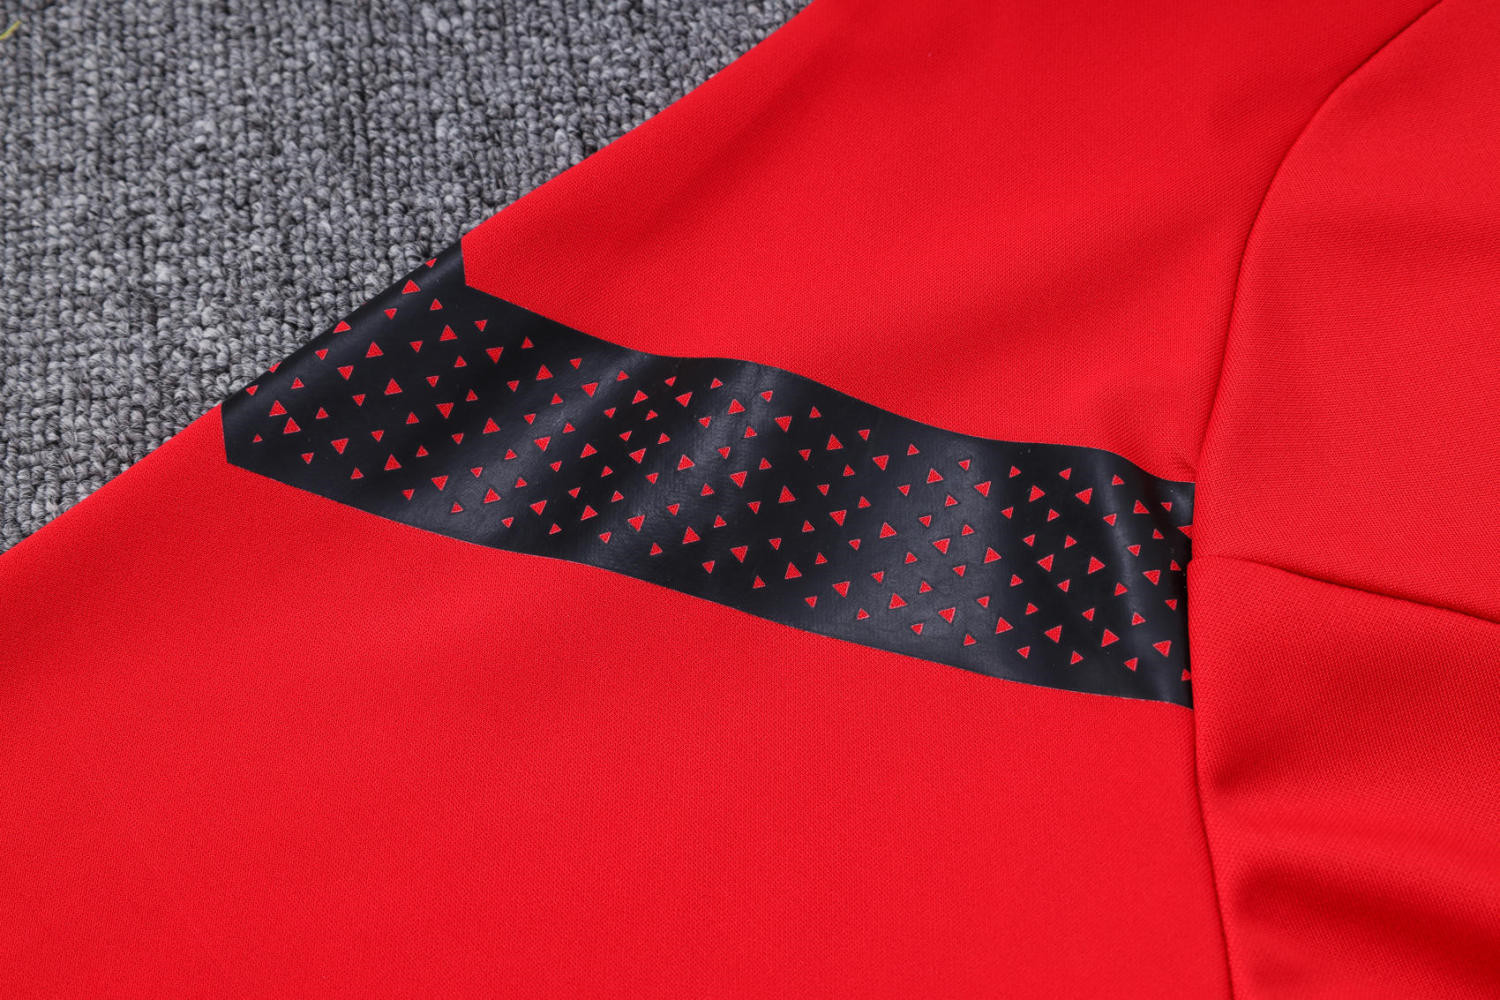 AC Milan Soccer Jacket + Pants Replica Red 2022/23 Mens